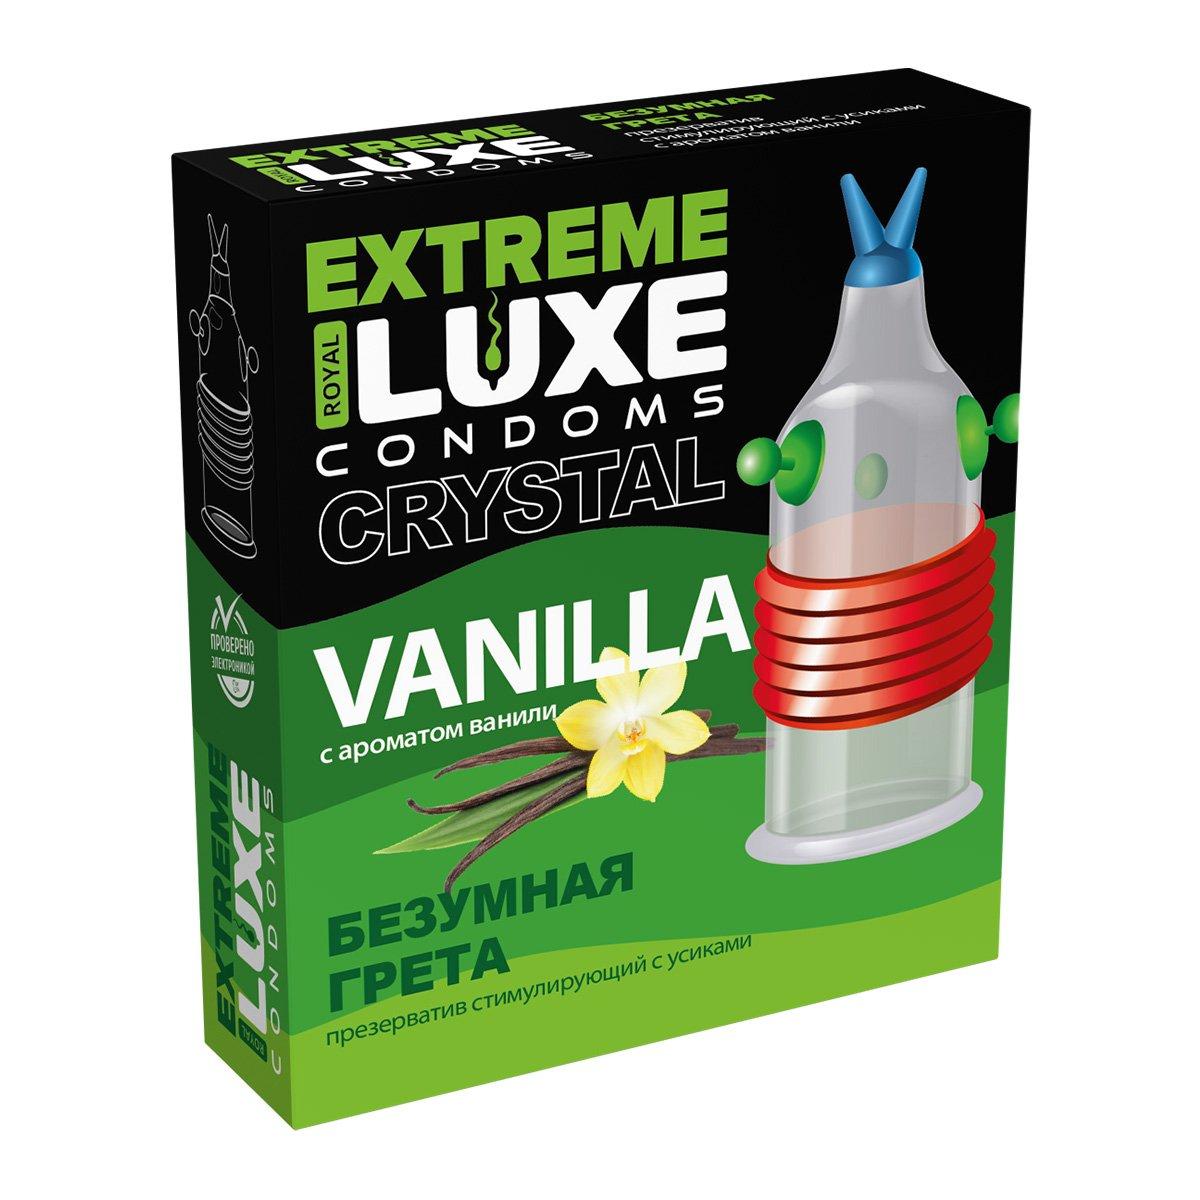 Презерватив Luxe Extreme "Безумная Грета" (ваниль), 1 штука